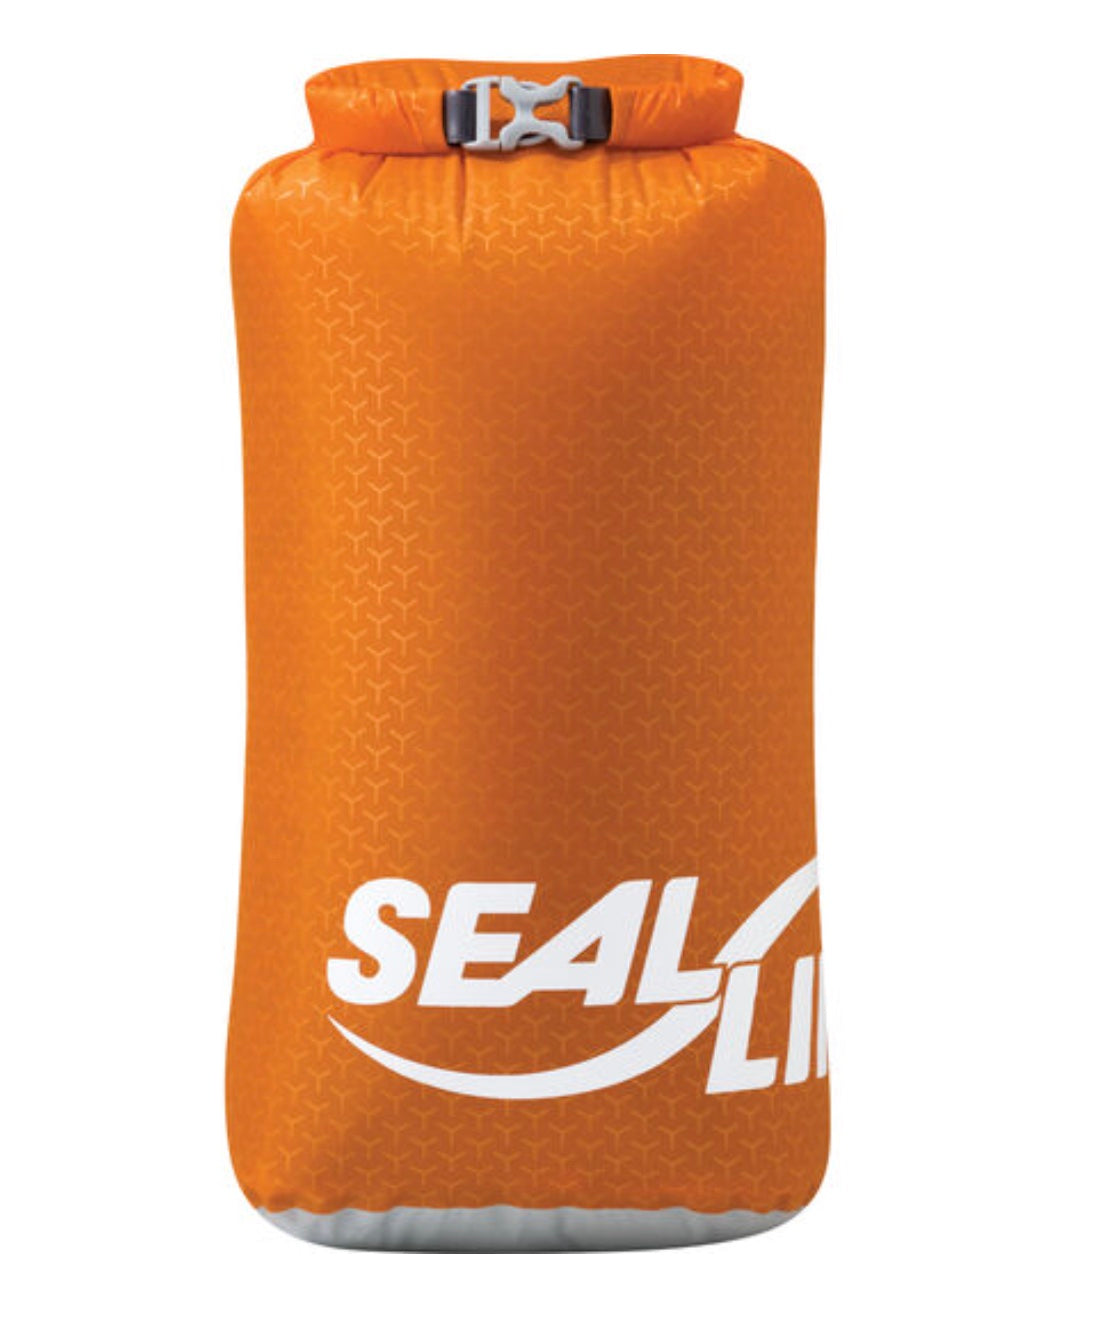 SealLine Blocker Dry Sack 30L